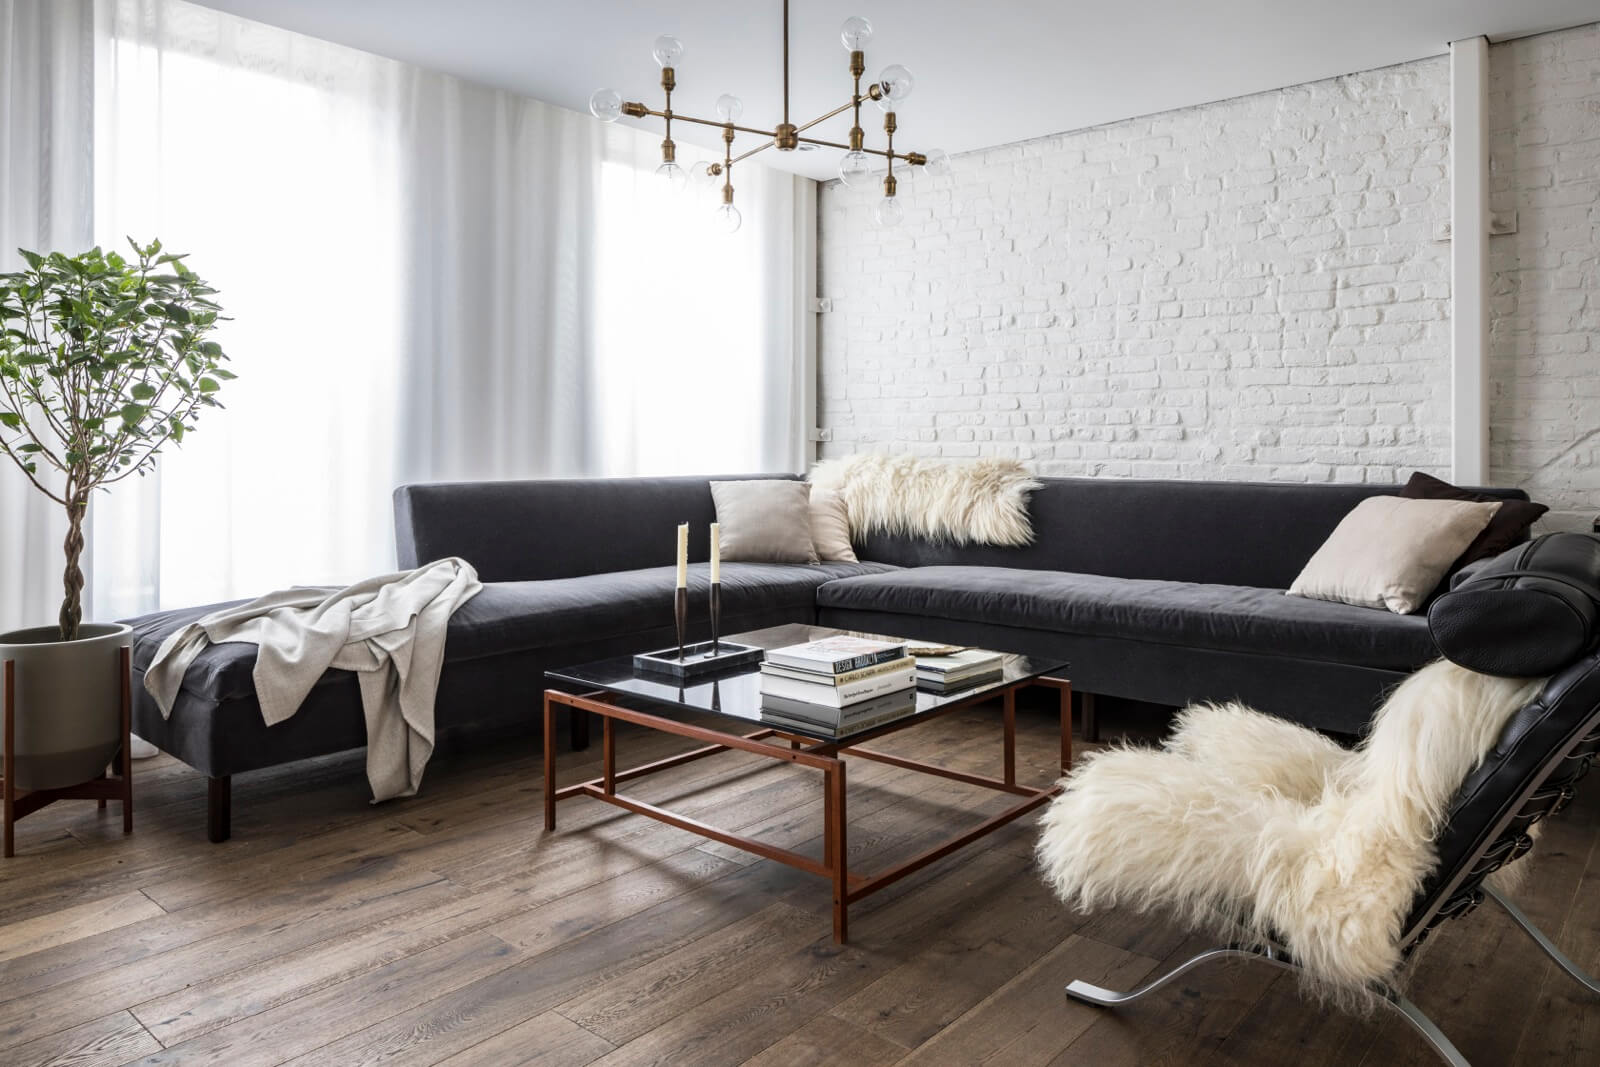 pix3-1 Scandinavian living room ideas that look fantastic